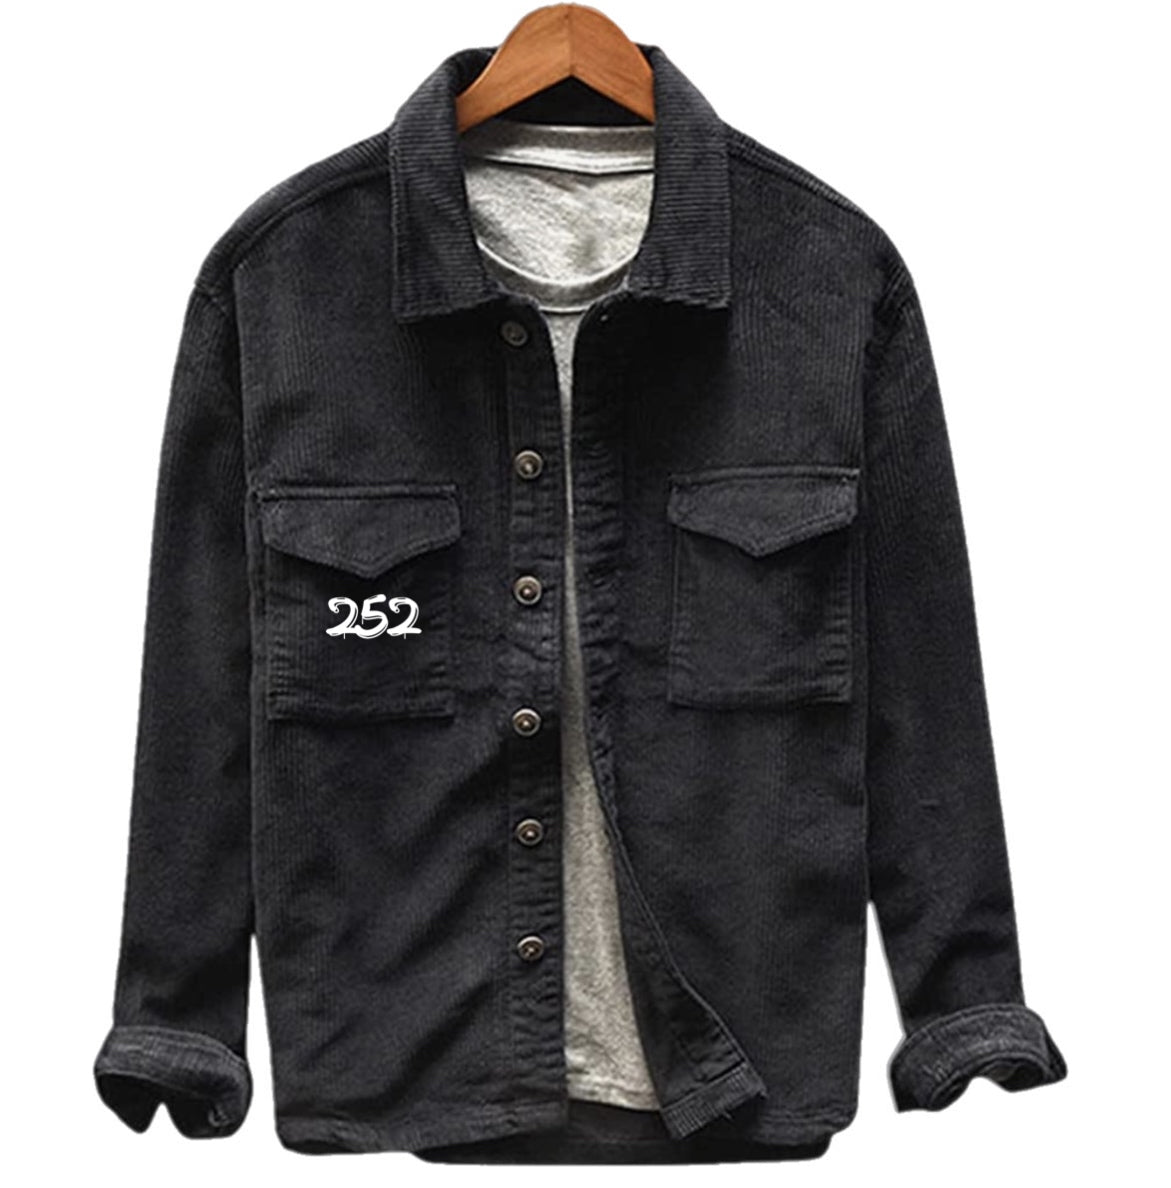 Men’s Corduroy Long Sleeve Casual Shirt jacket